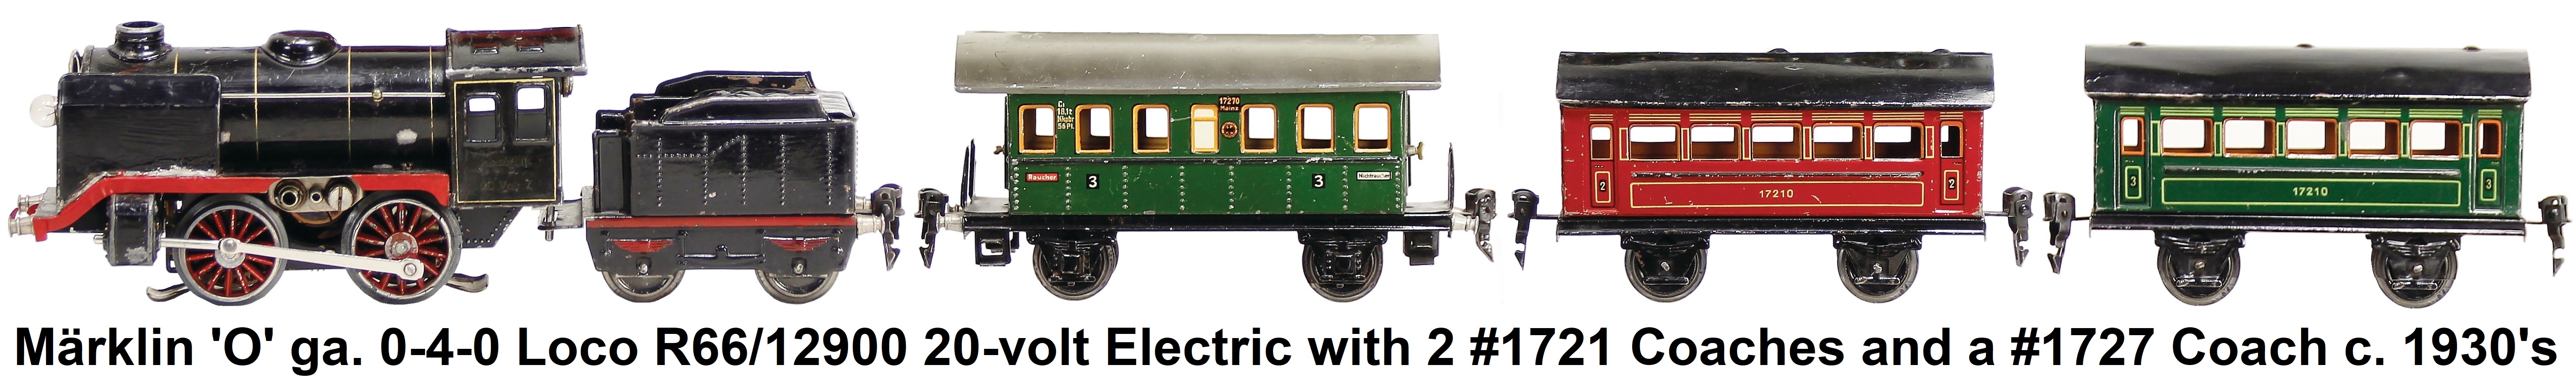 Märklin 'O' gauge 0-4-0 R66/12900 20-volt electric with 2 #1721 coaches and a #1727 coach c.1930's